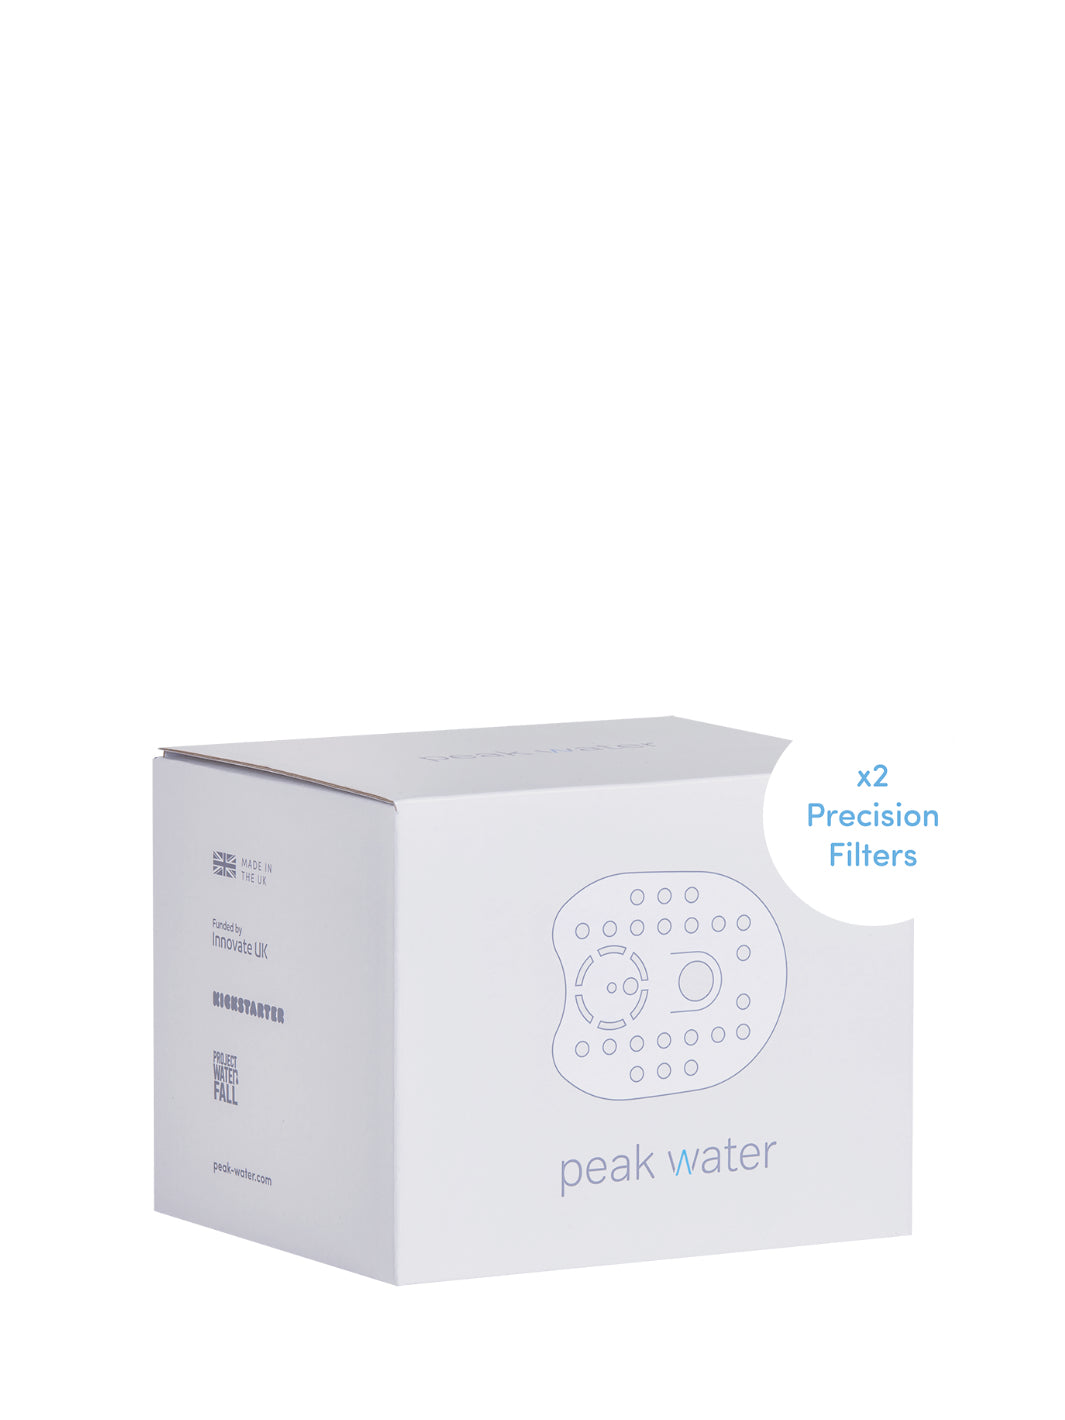 PEAK WATER Precision Filters (2-Pack)